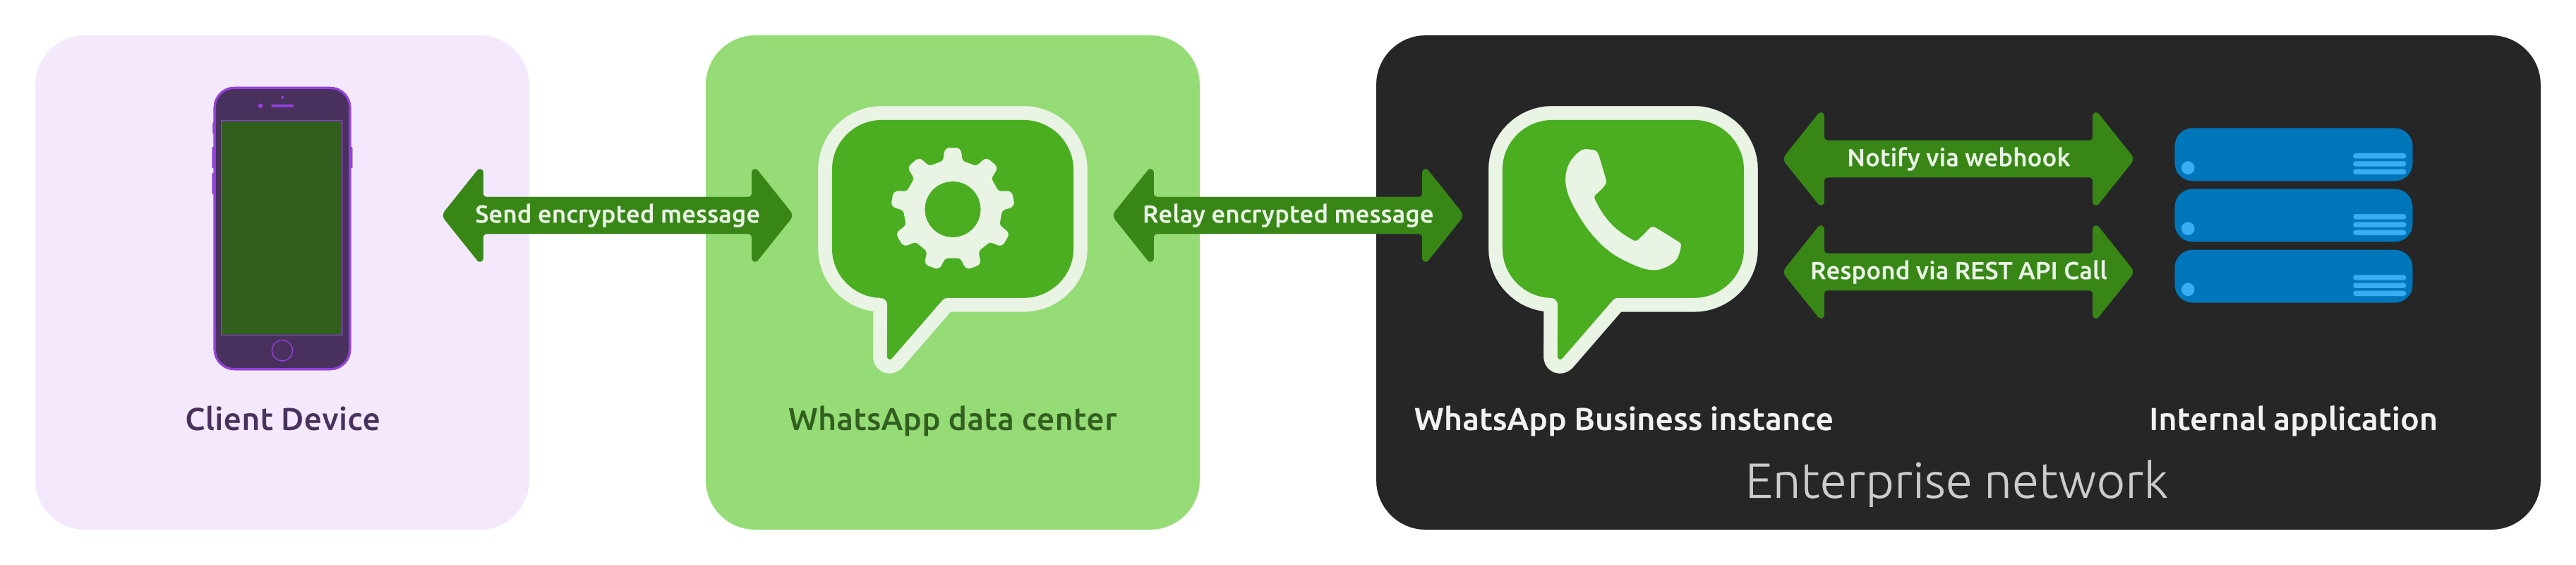 whatsapp business api documentation